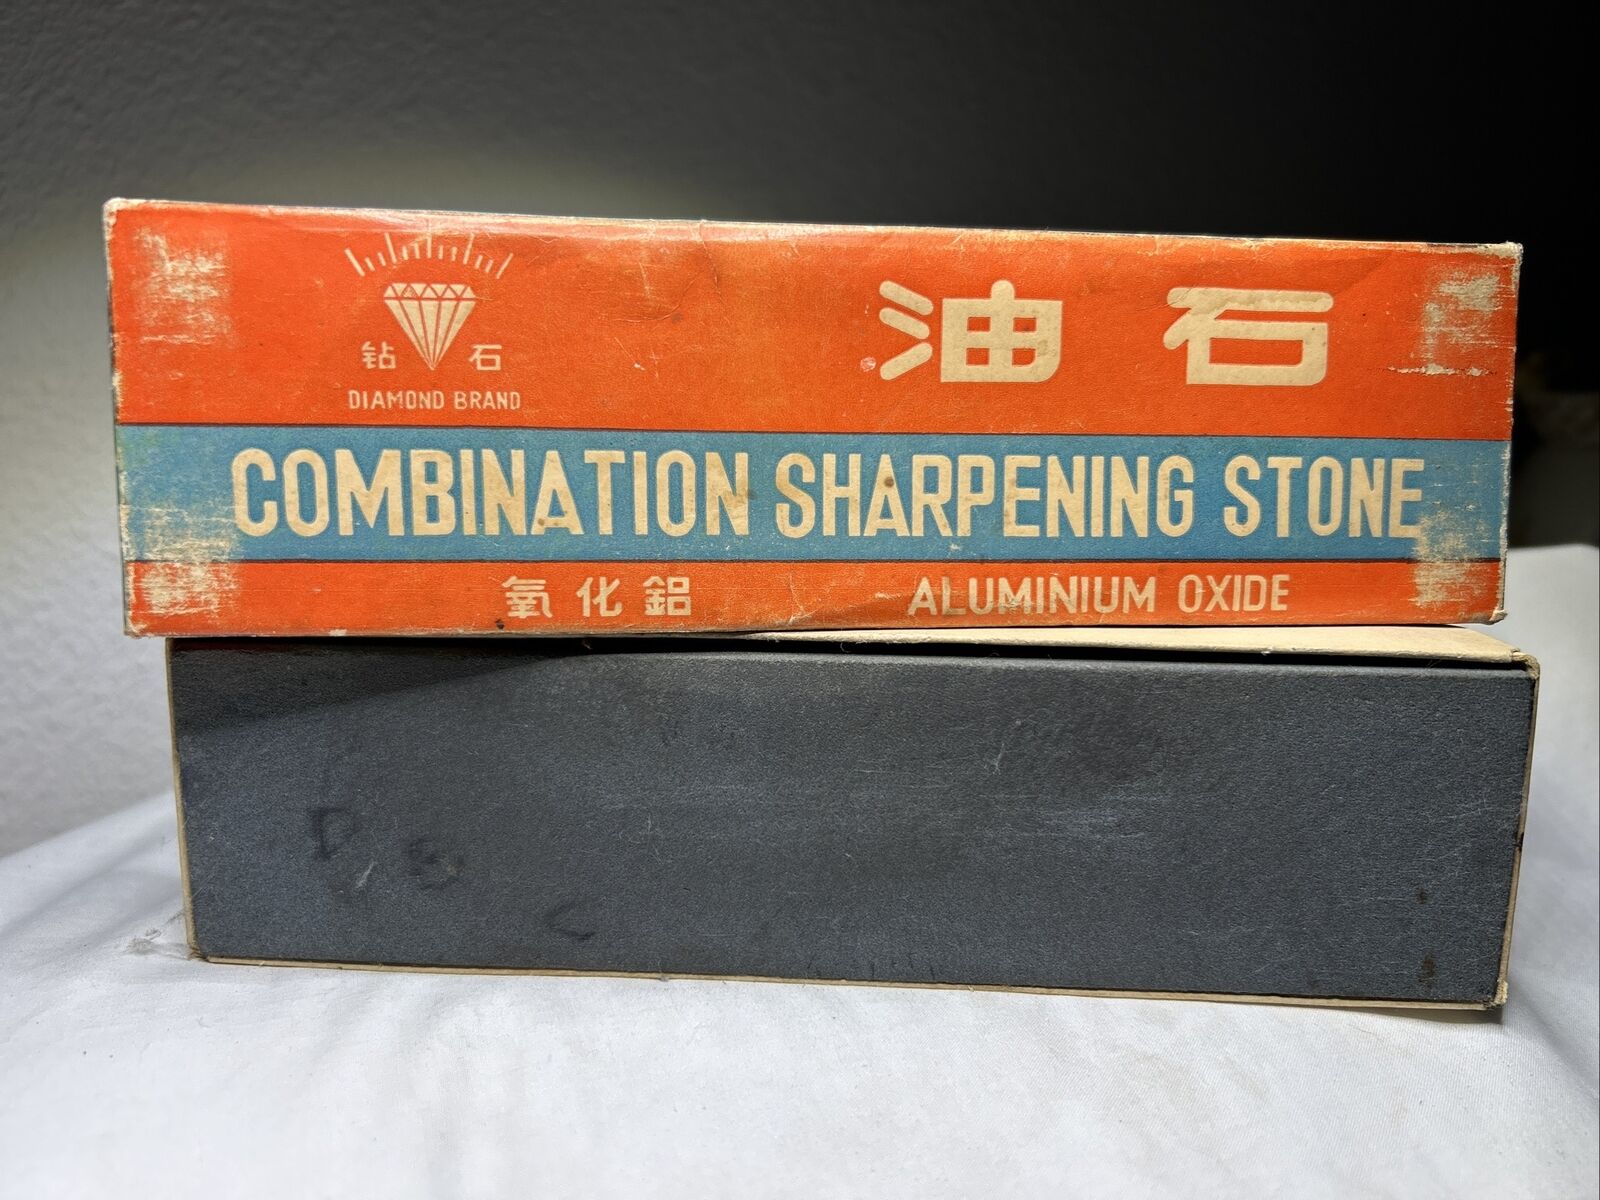 Vintage DIAMOND BRAND COMBINATION SHARPENING STONE - Original Box